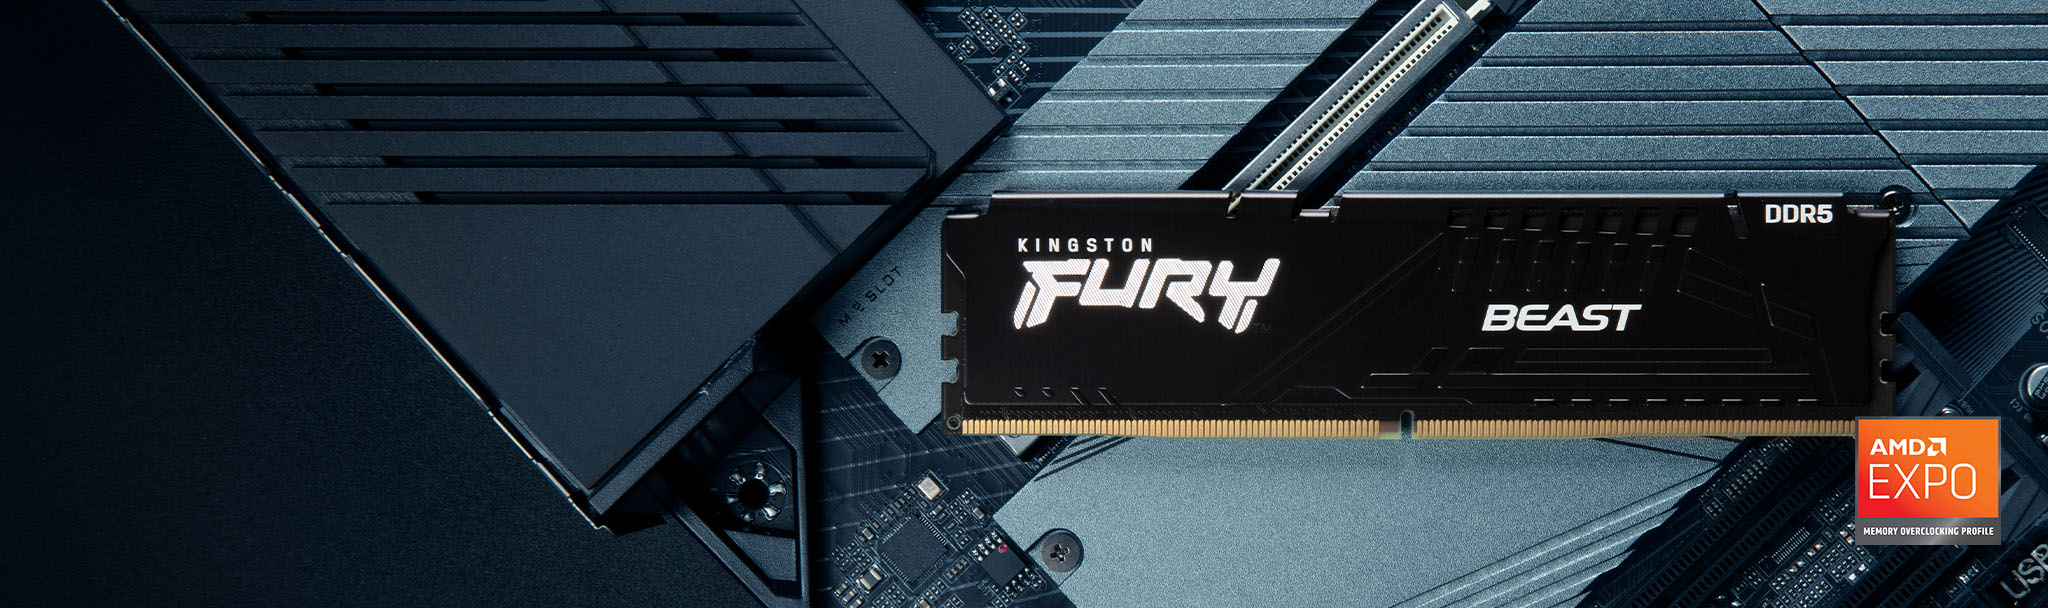 Kingston FURY™ Beast DDR5 memória, AMD EXPO tanúsítvánnyal